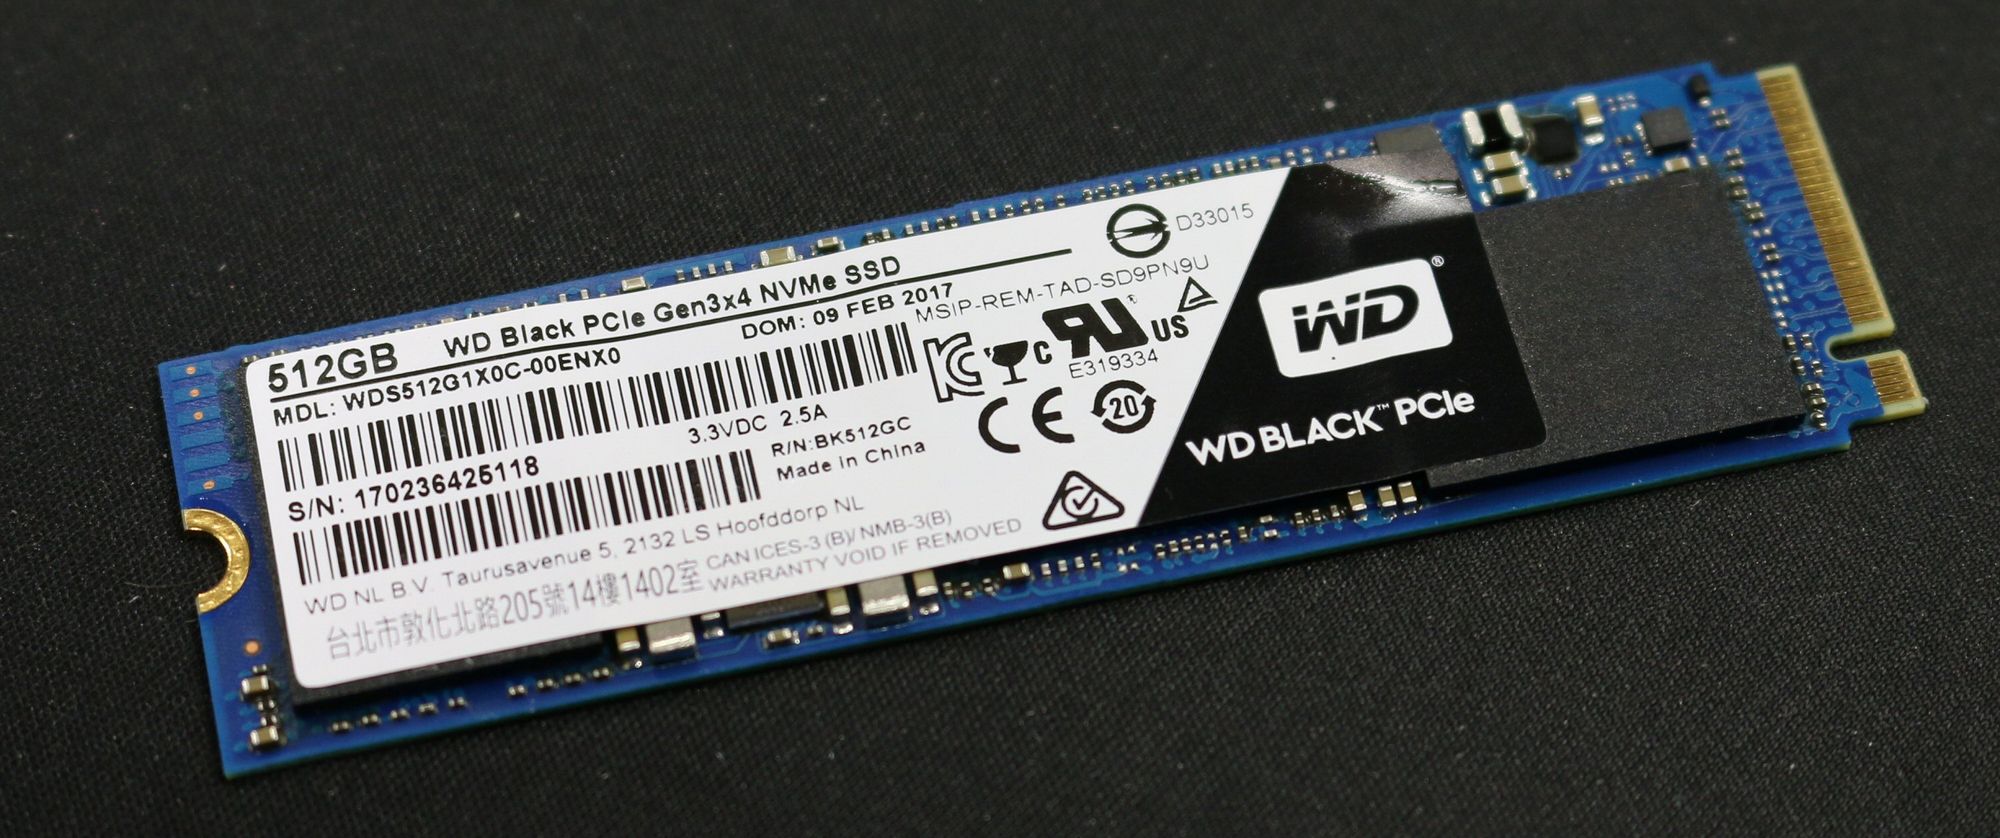 TEST WD Black PCIe SSD Ytelse Tekno